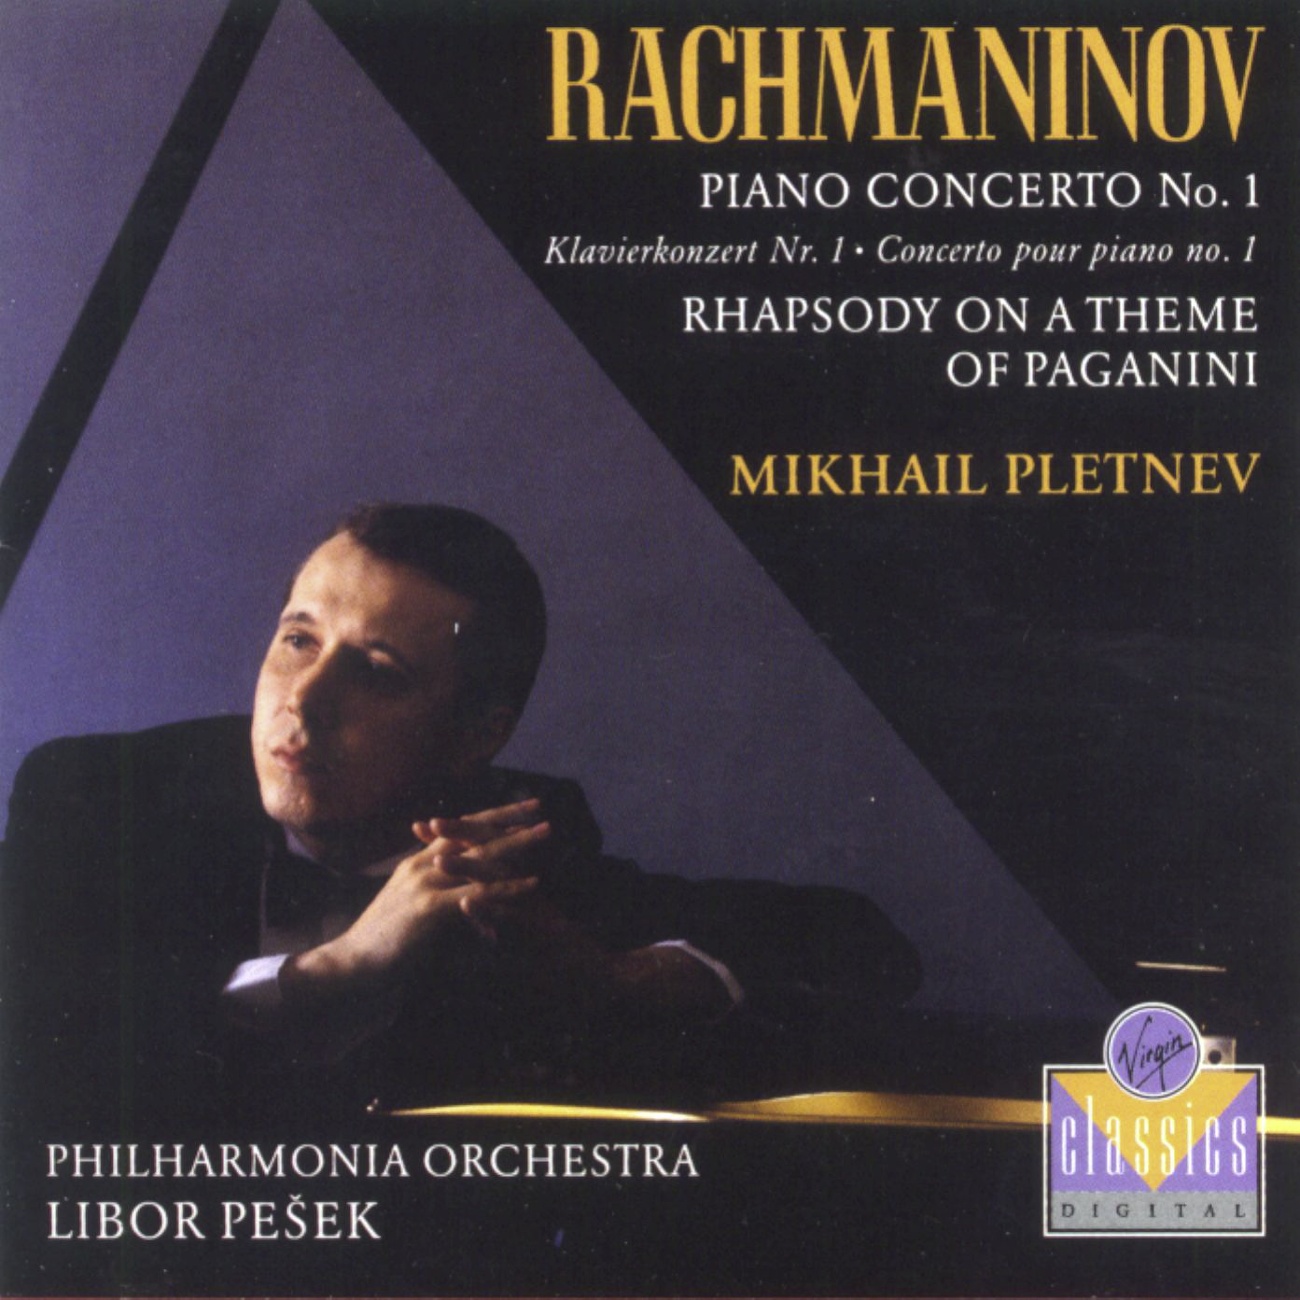 Rhapsody on a Theme of Paganini: Variation XI - Moderato